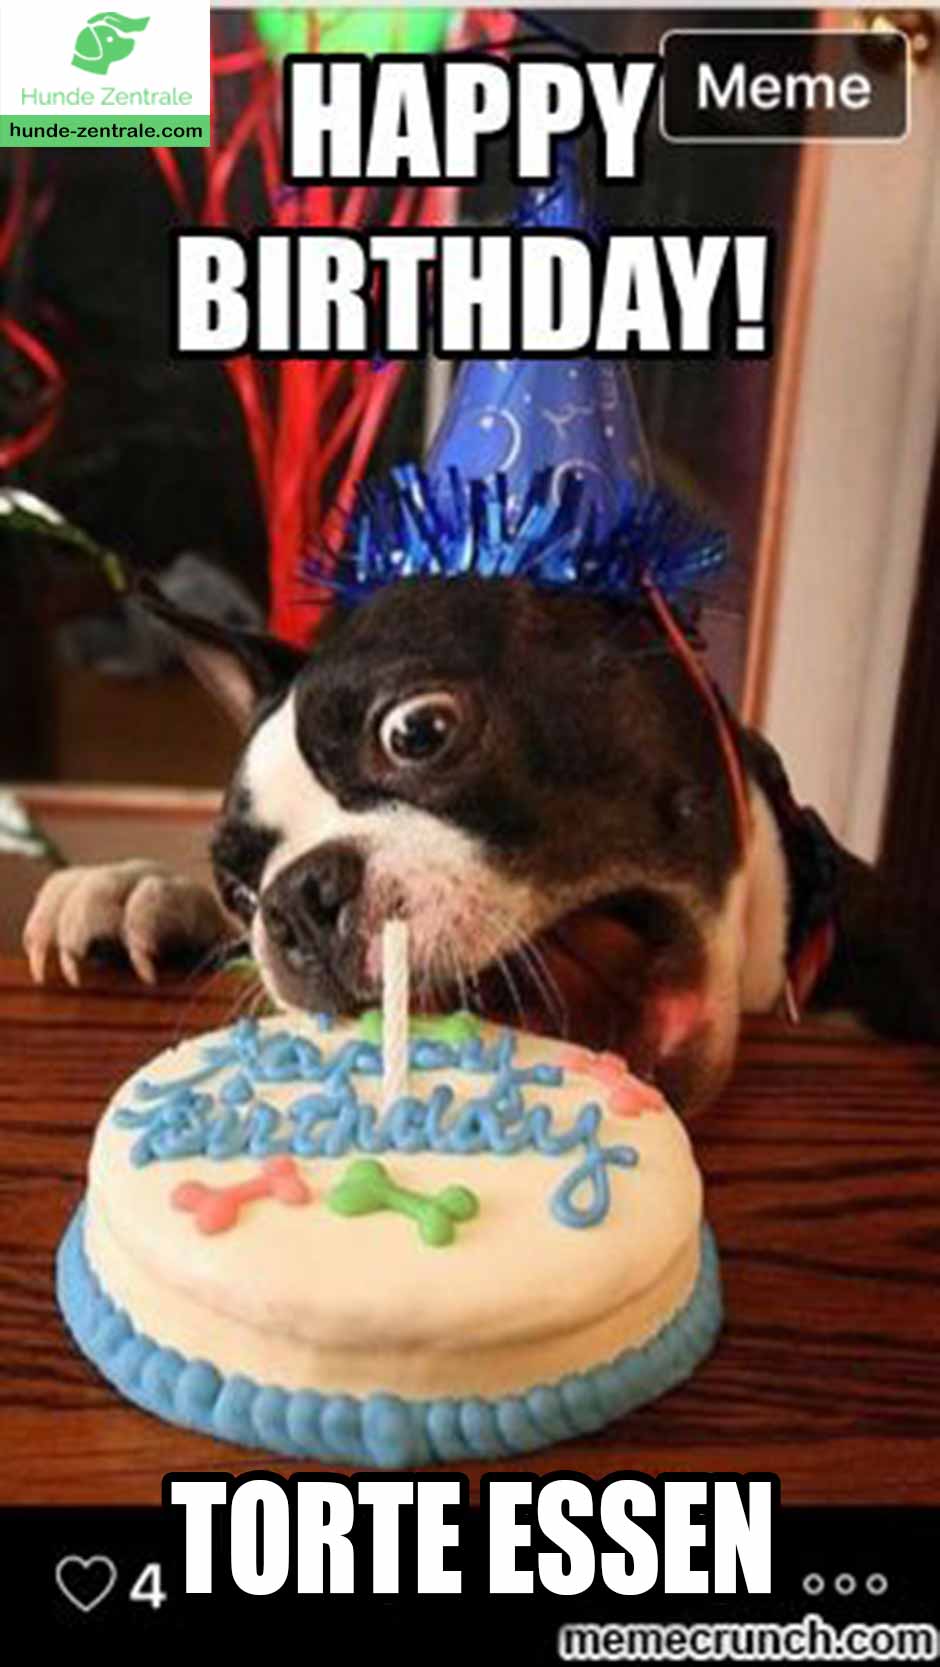 Happy-Birthday-Hundememe-torte-essen